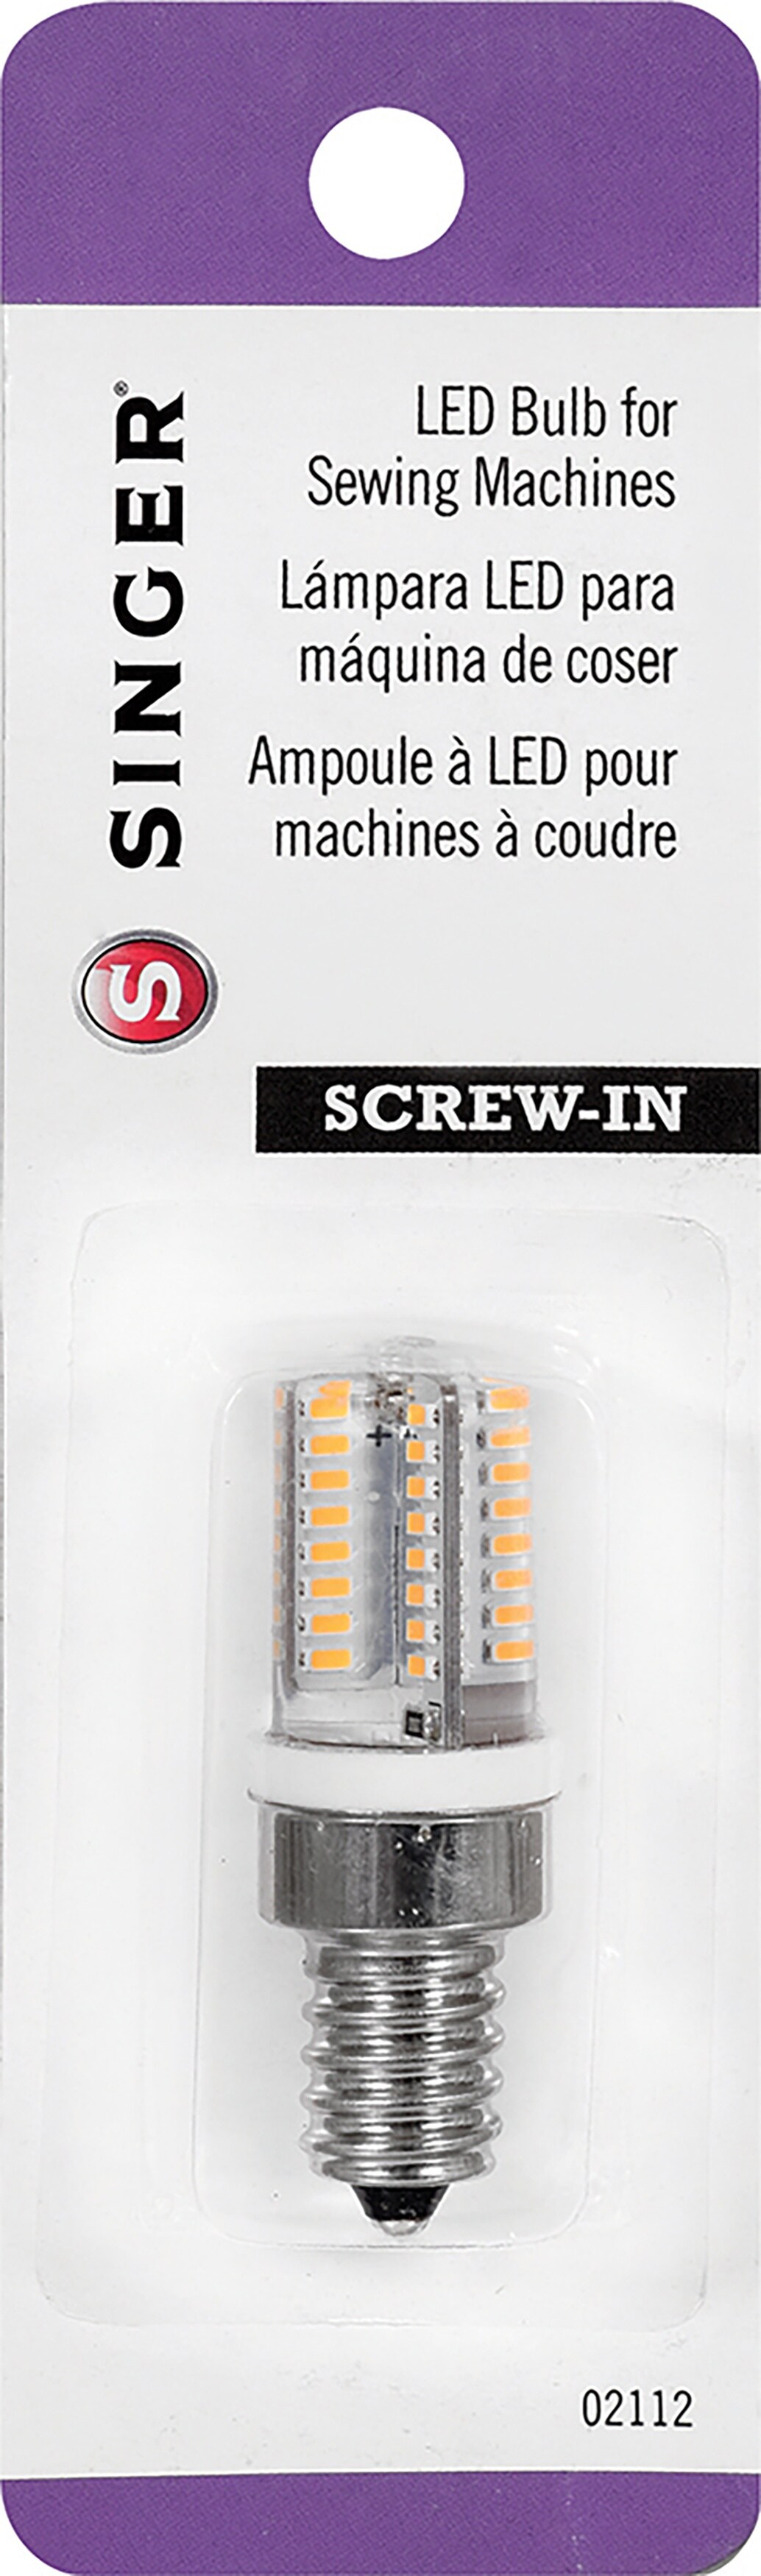 SINGER Sewing Machine LED Screw-In Light Bulb